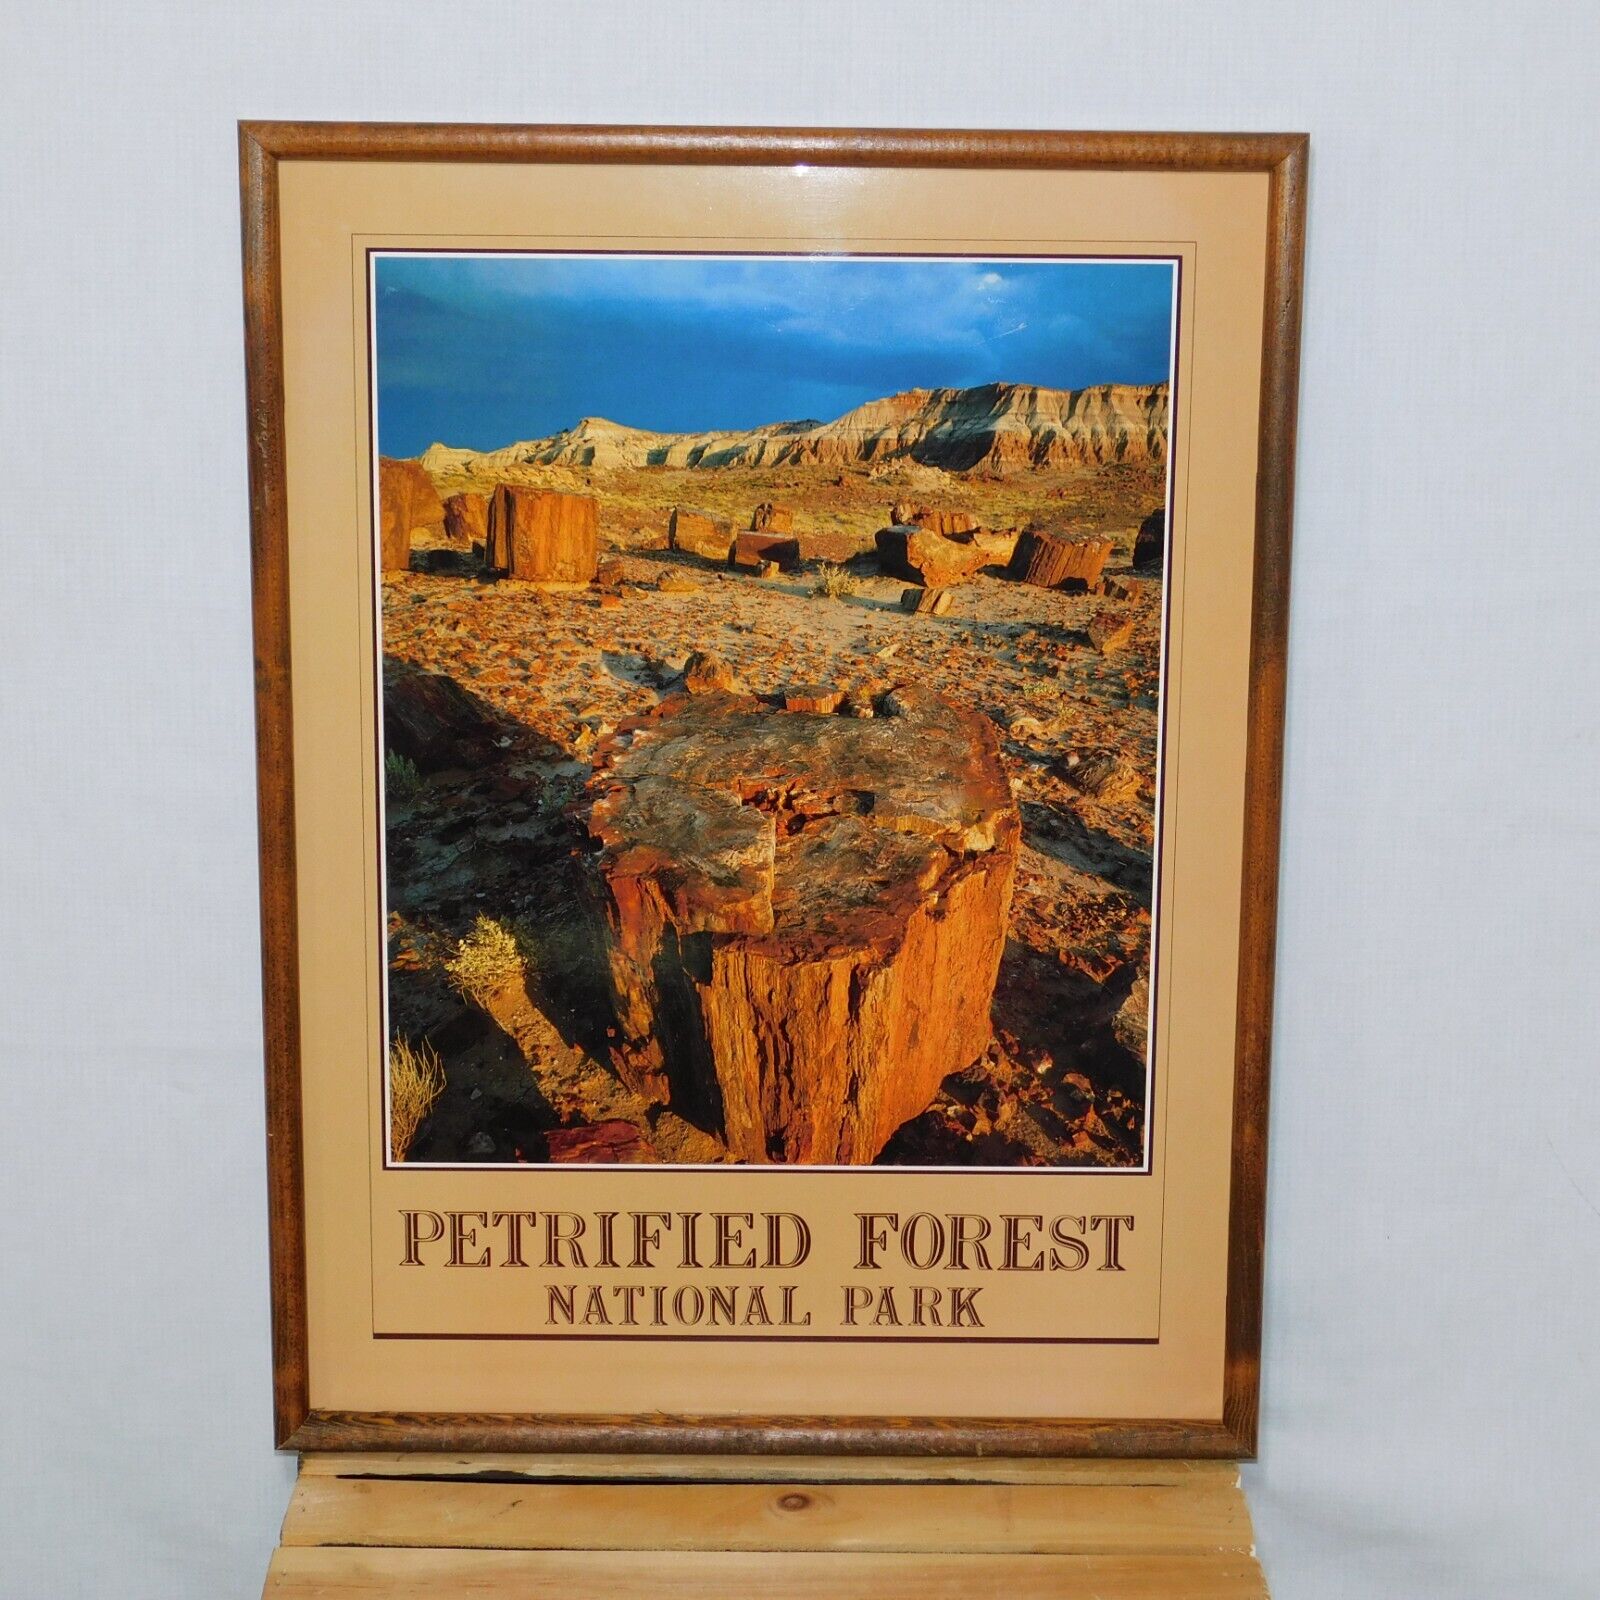 PETRIFIED FOREST NATIONAL PARK Photo Print Poster on Hardboard 25 X 19 Oak Frame